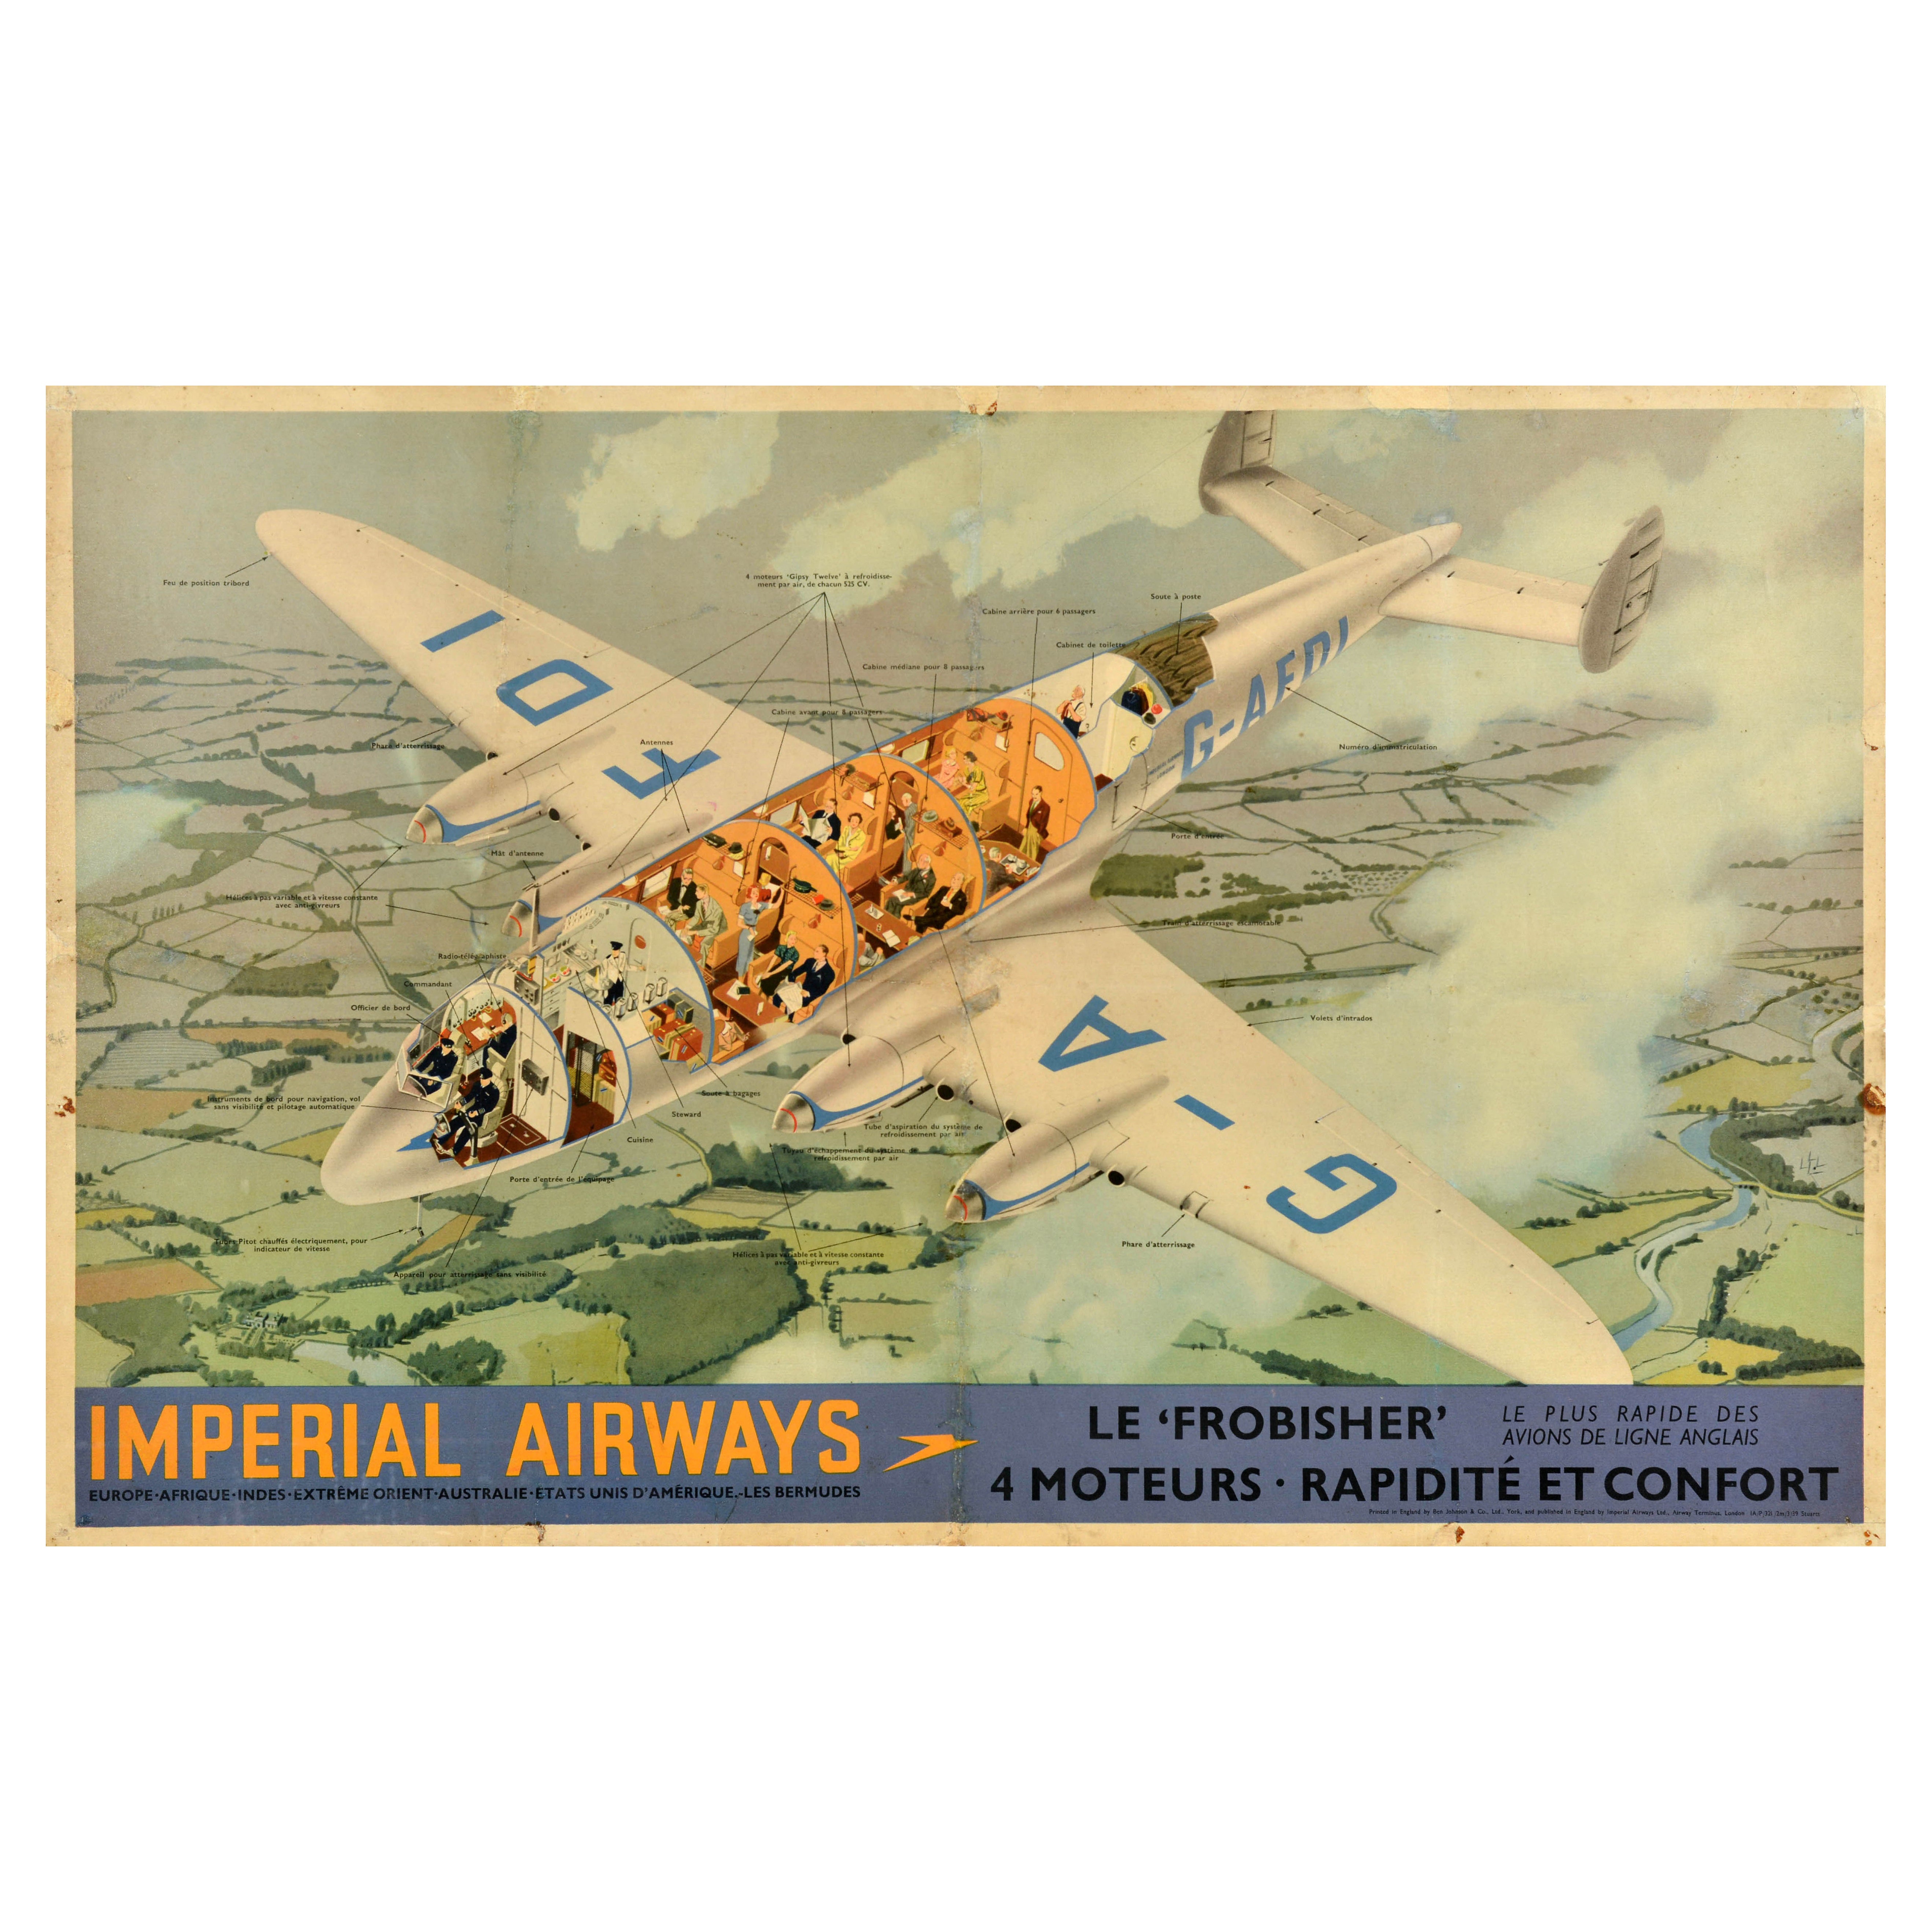 Original Vintage Travel Advertising Poster Imperial Airways Le Frobisher Design For Sale